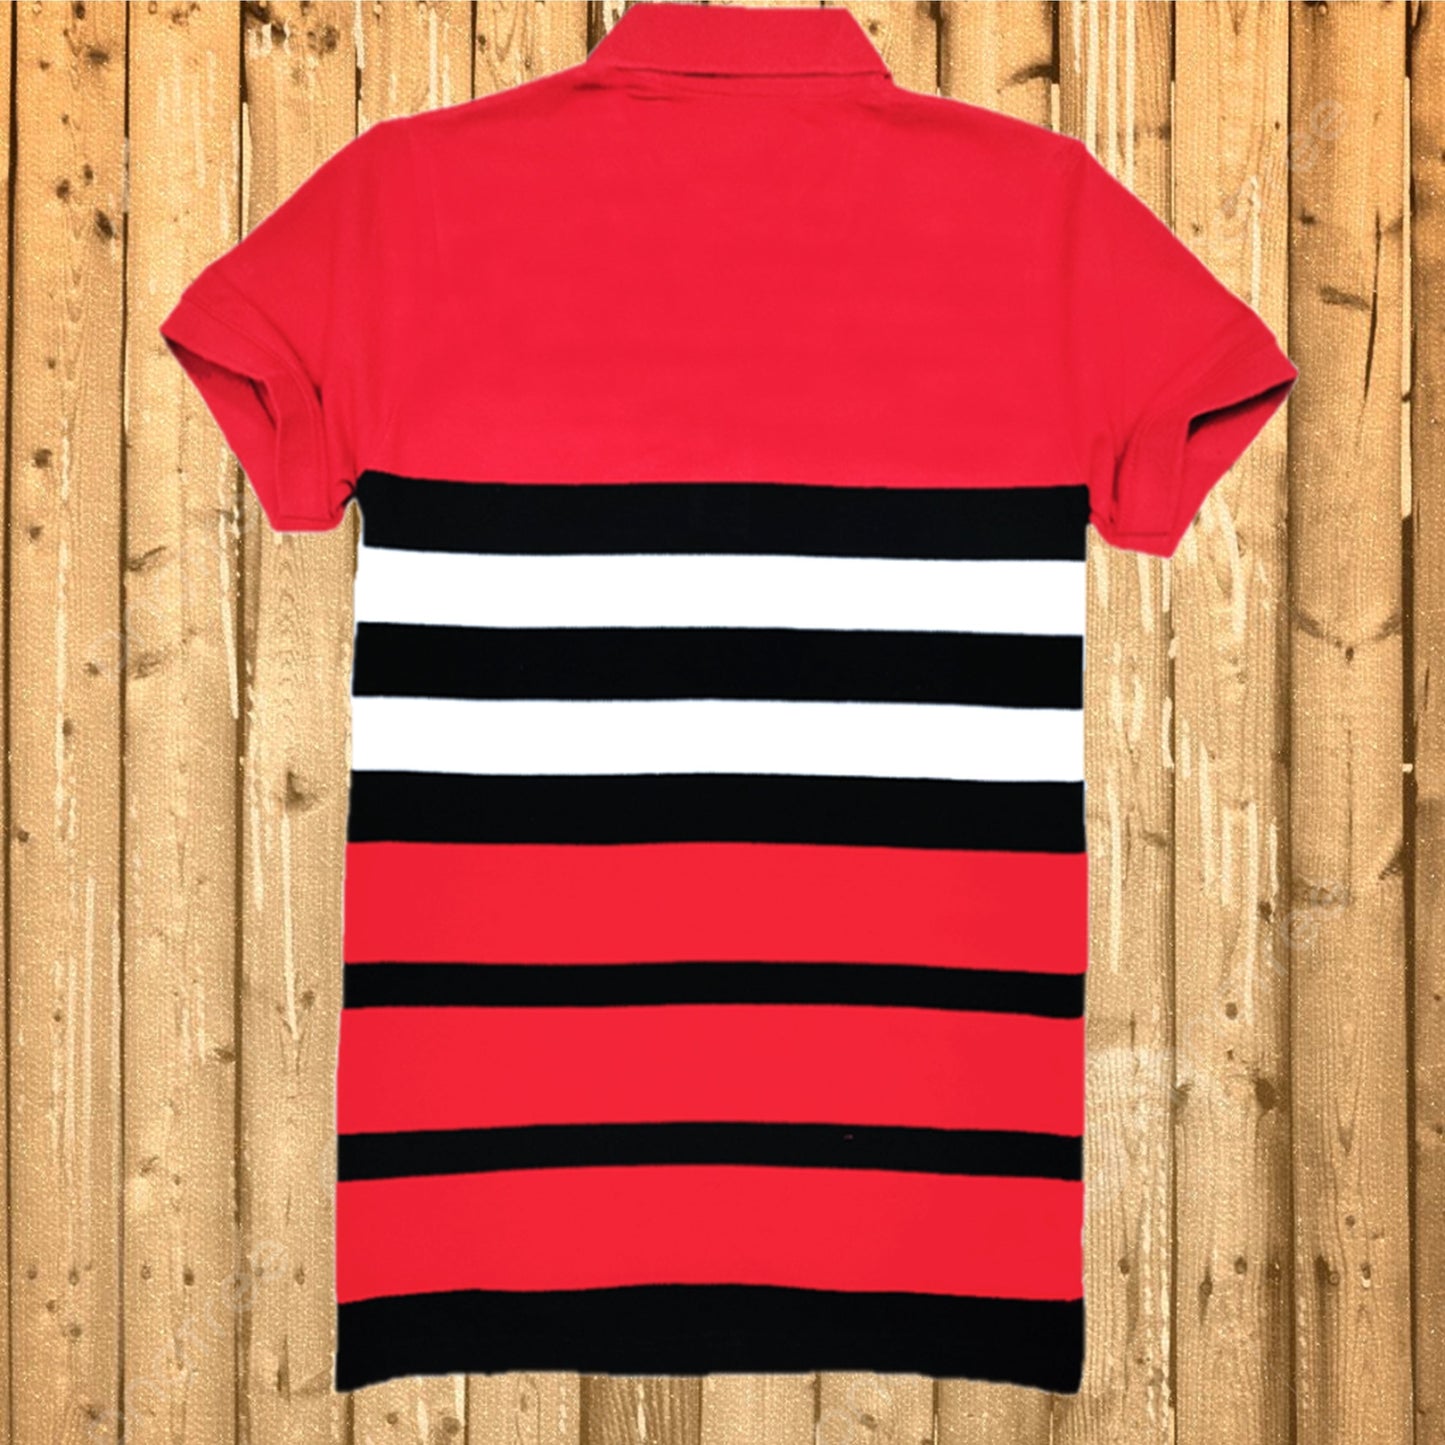 Men stylish T Shirt Autostripe Red Black and White